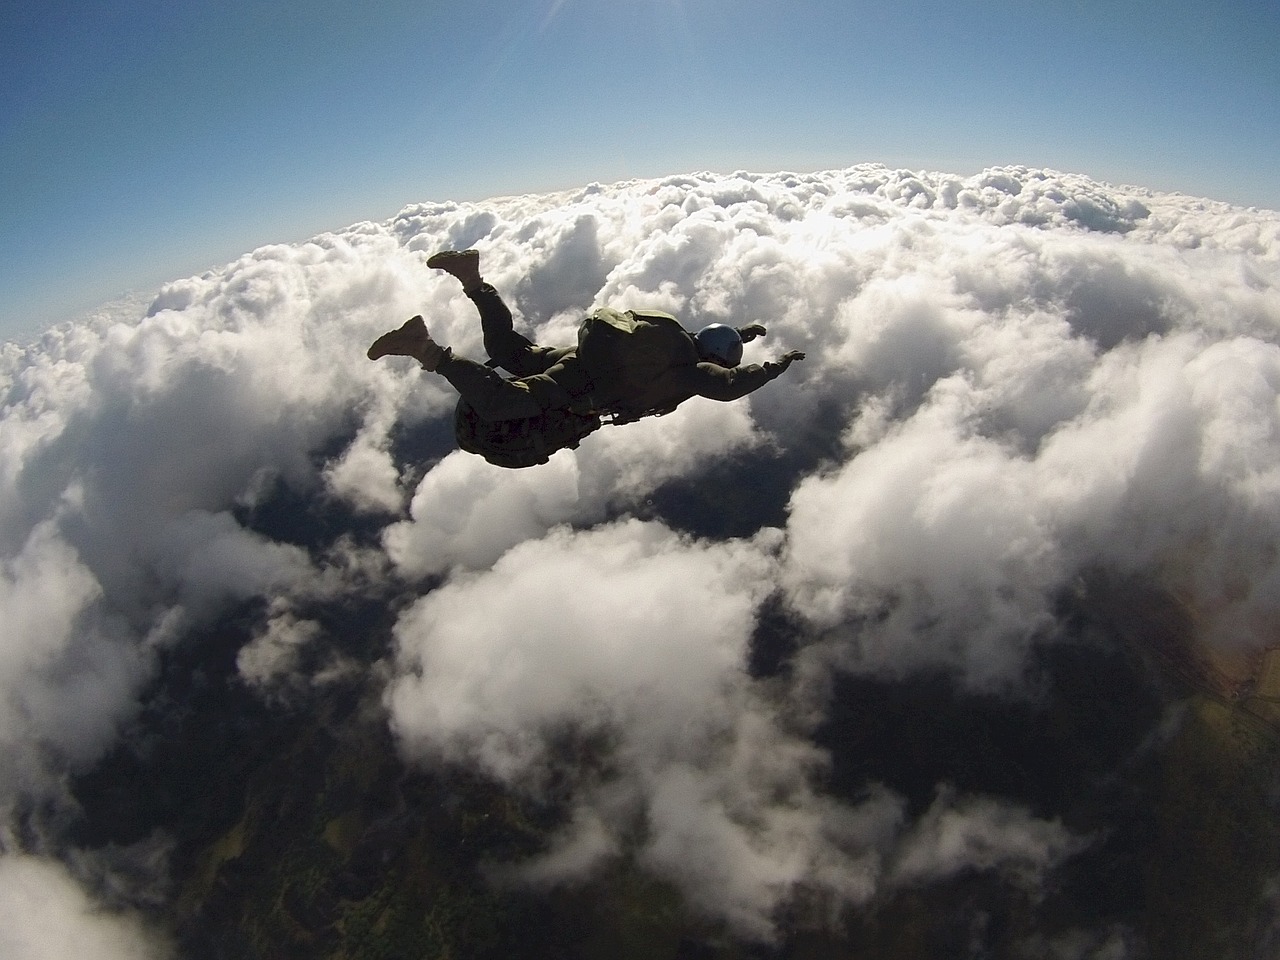 parachute skydiving parachuting free photo